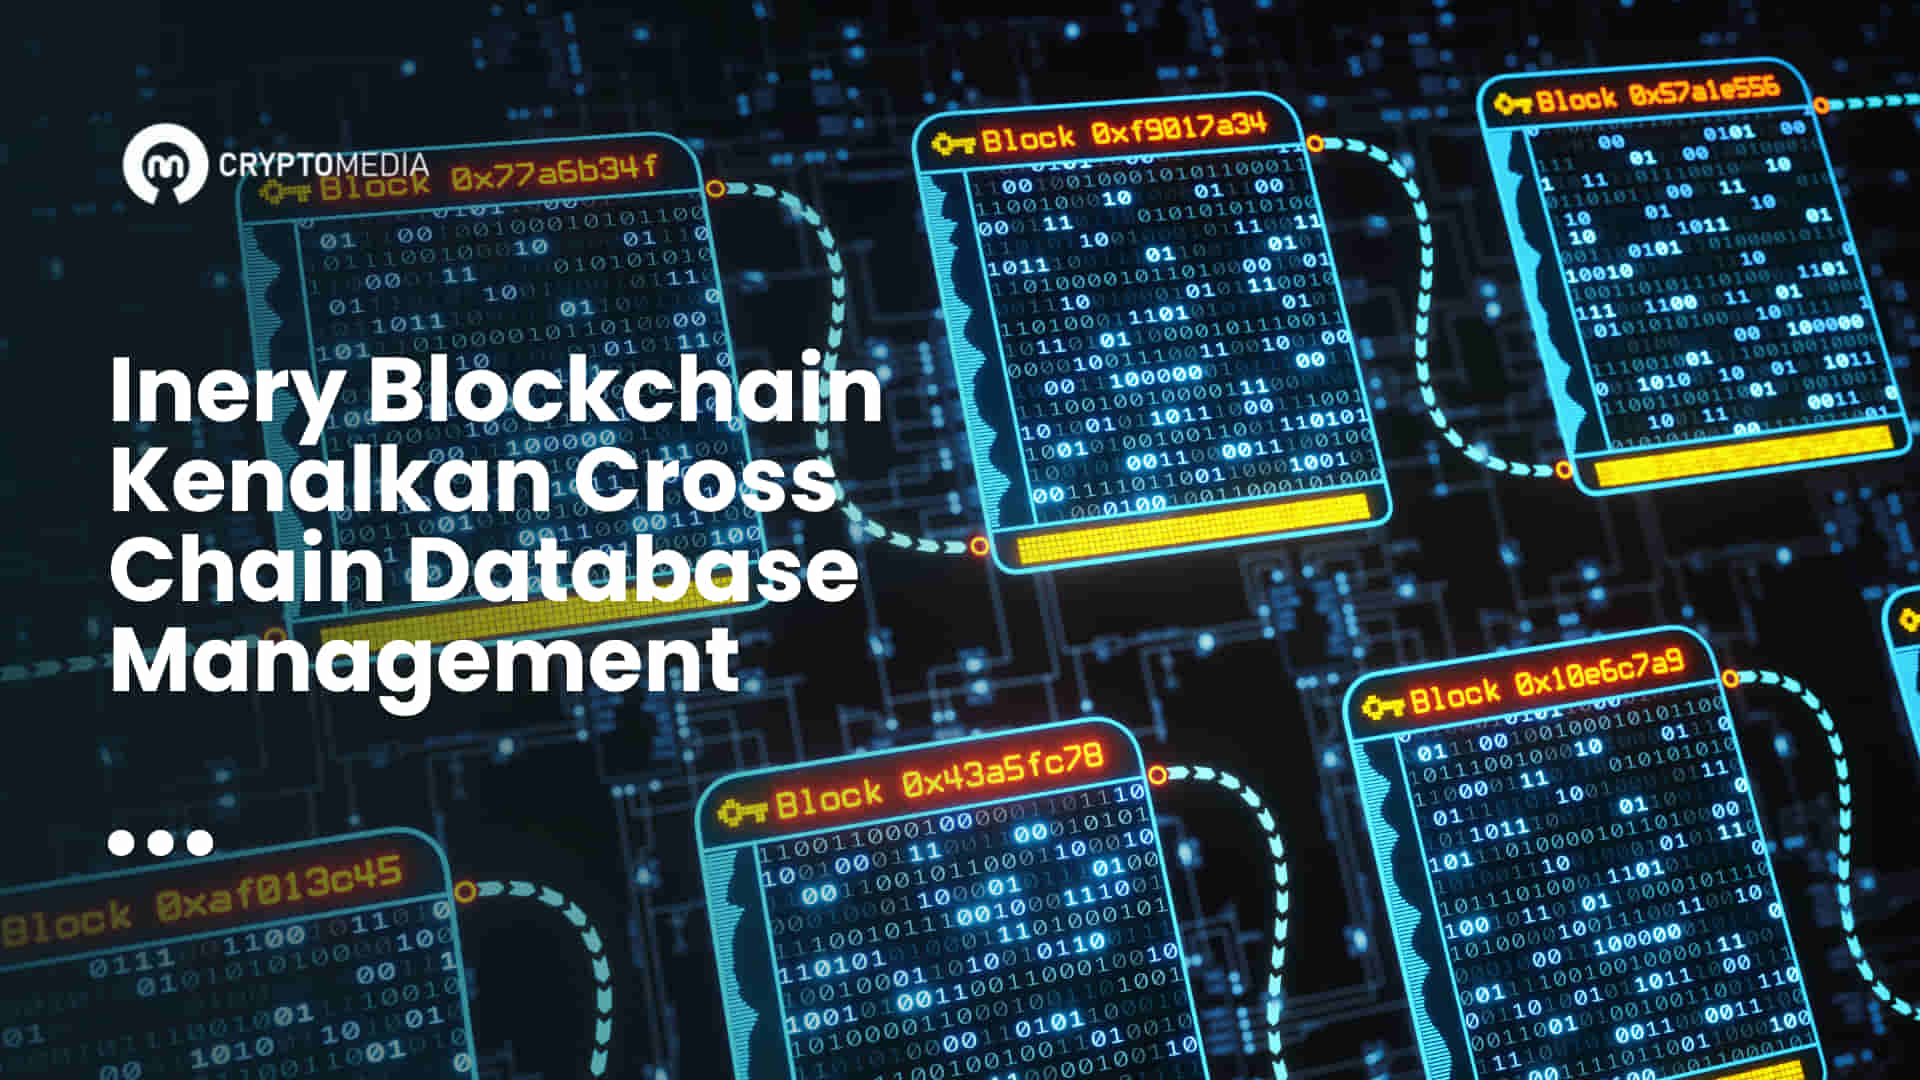 Inery Blockchain Kenalkan Cross Chain Database Management